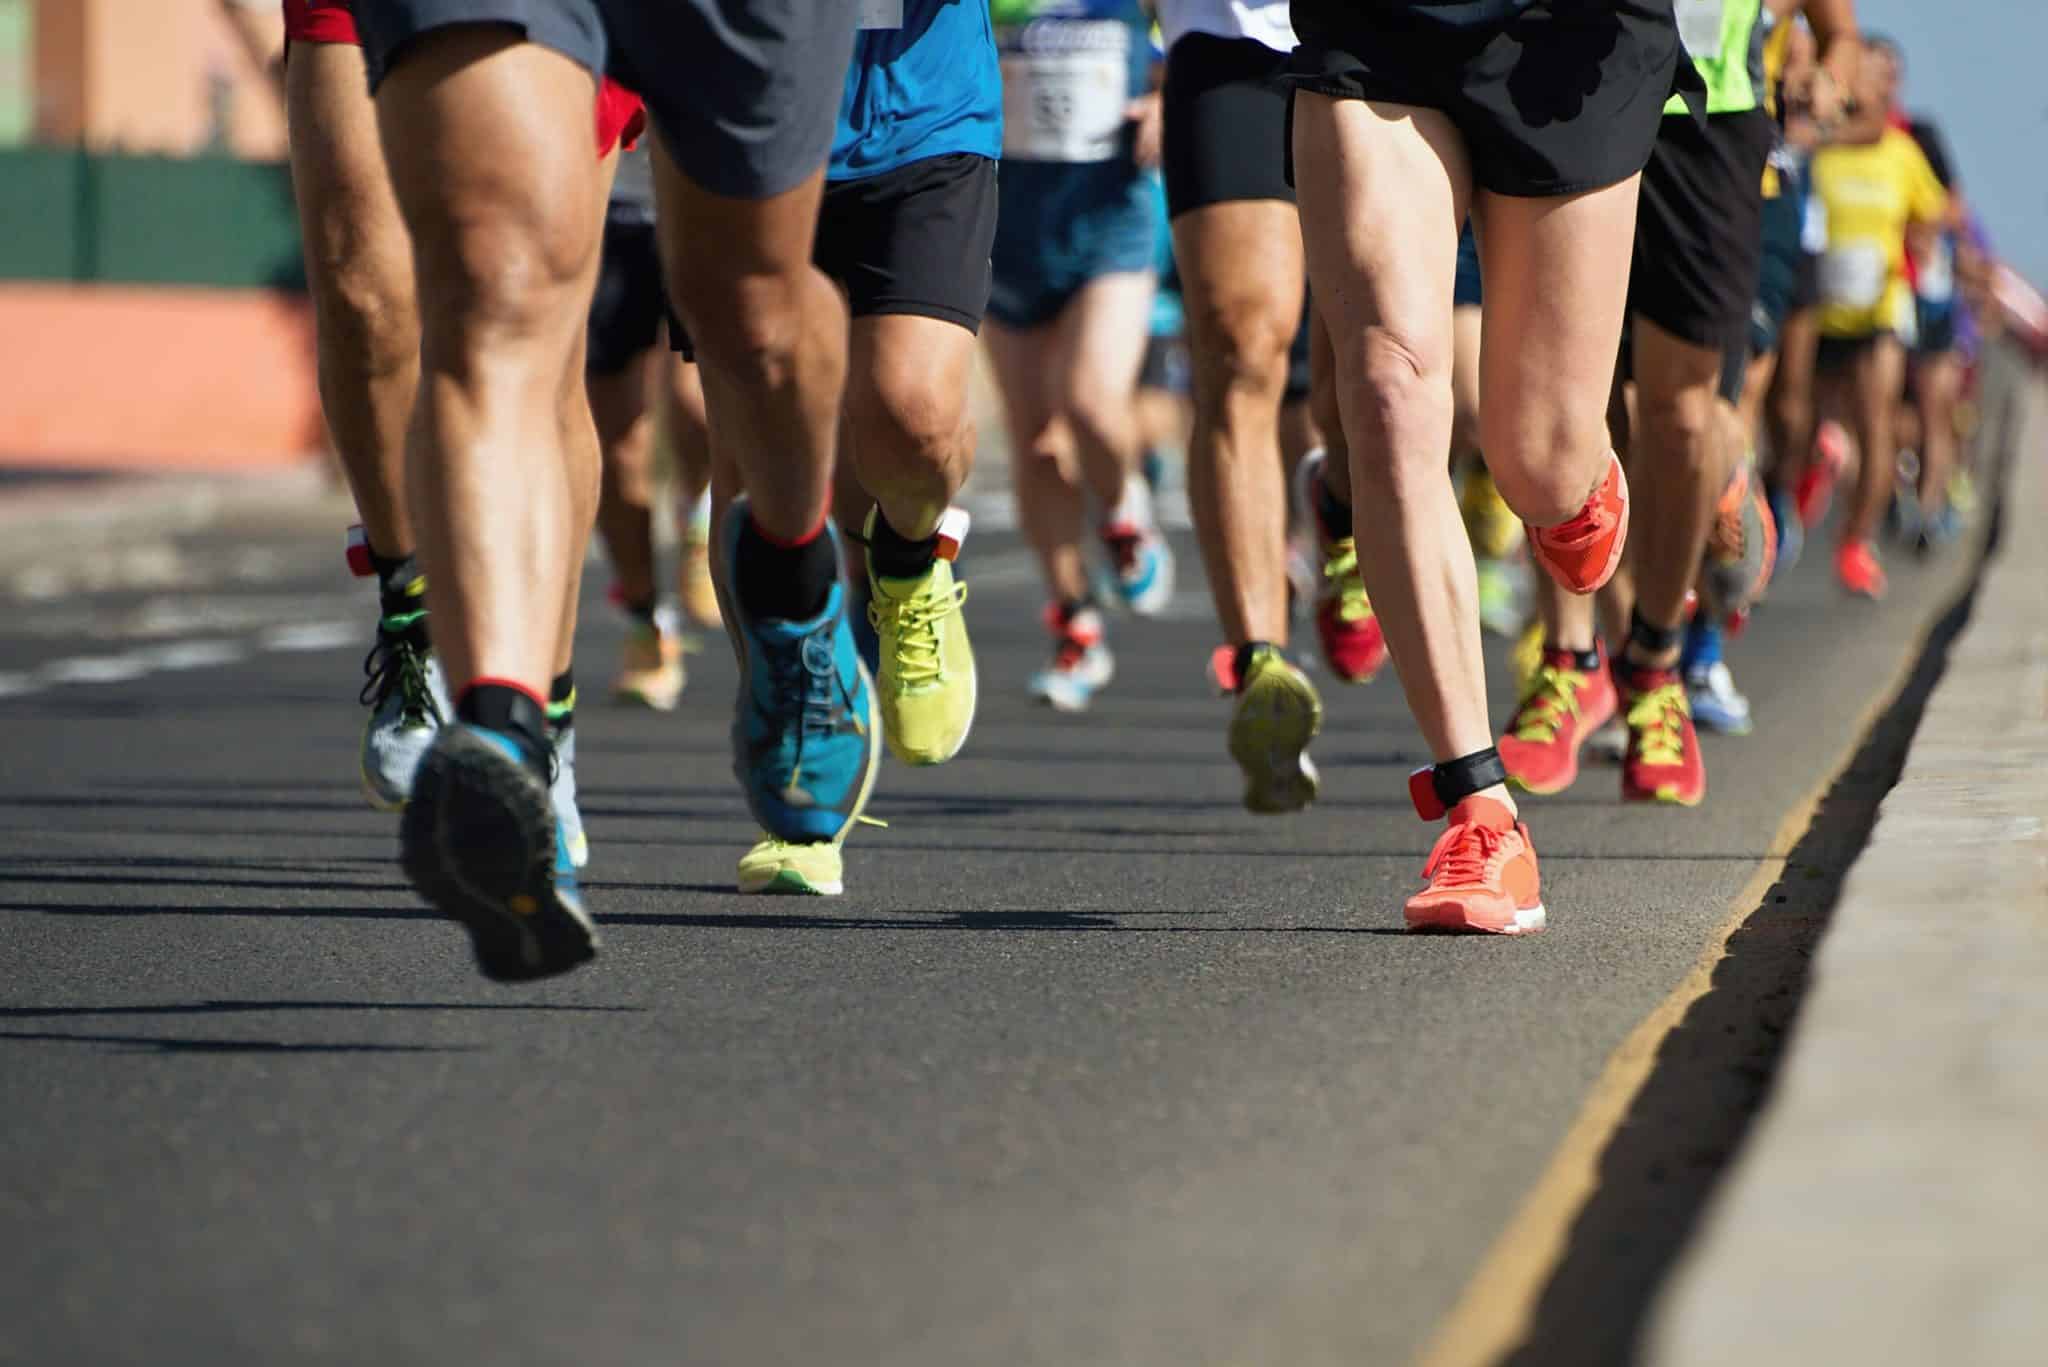 Feet of people running a marathon